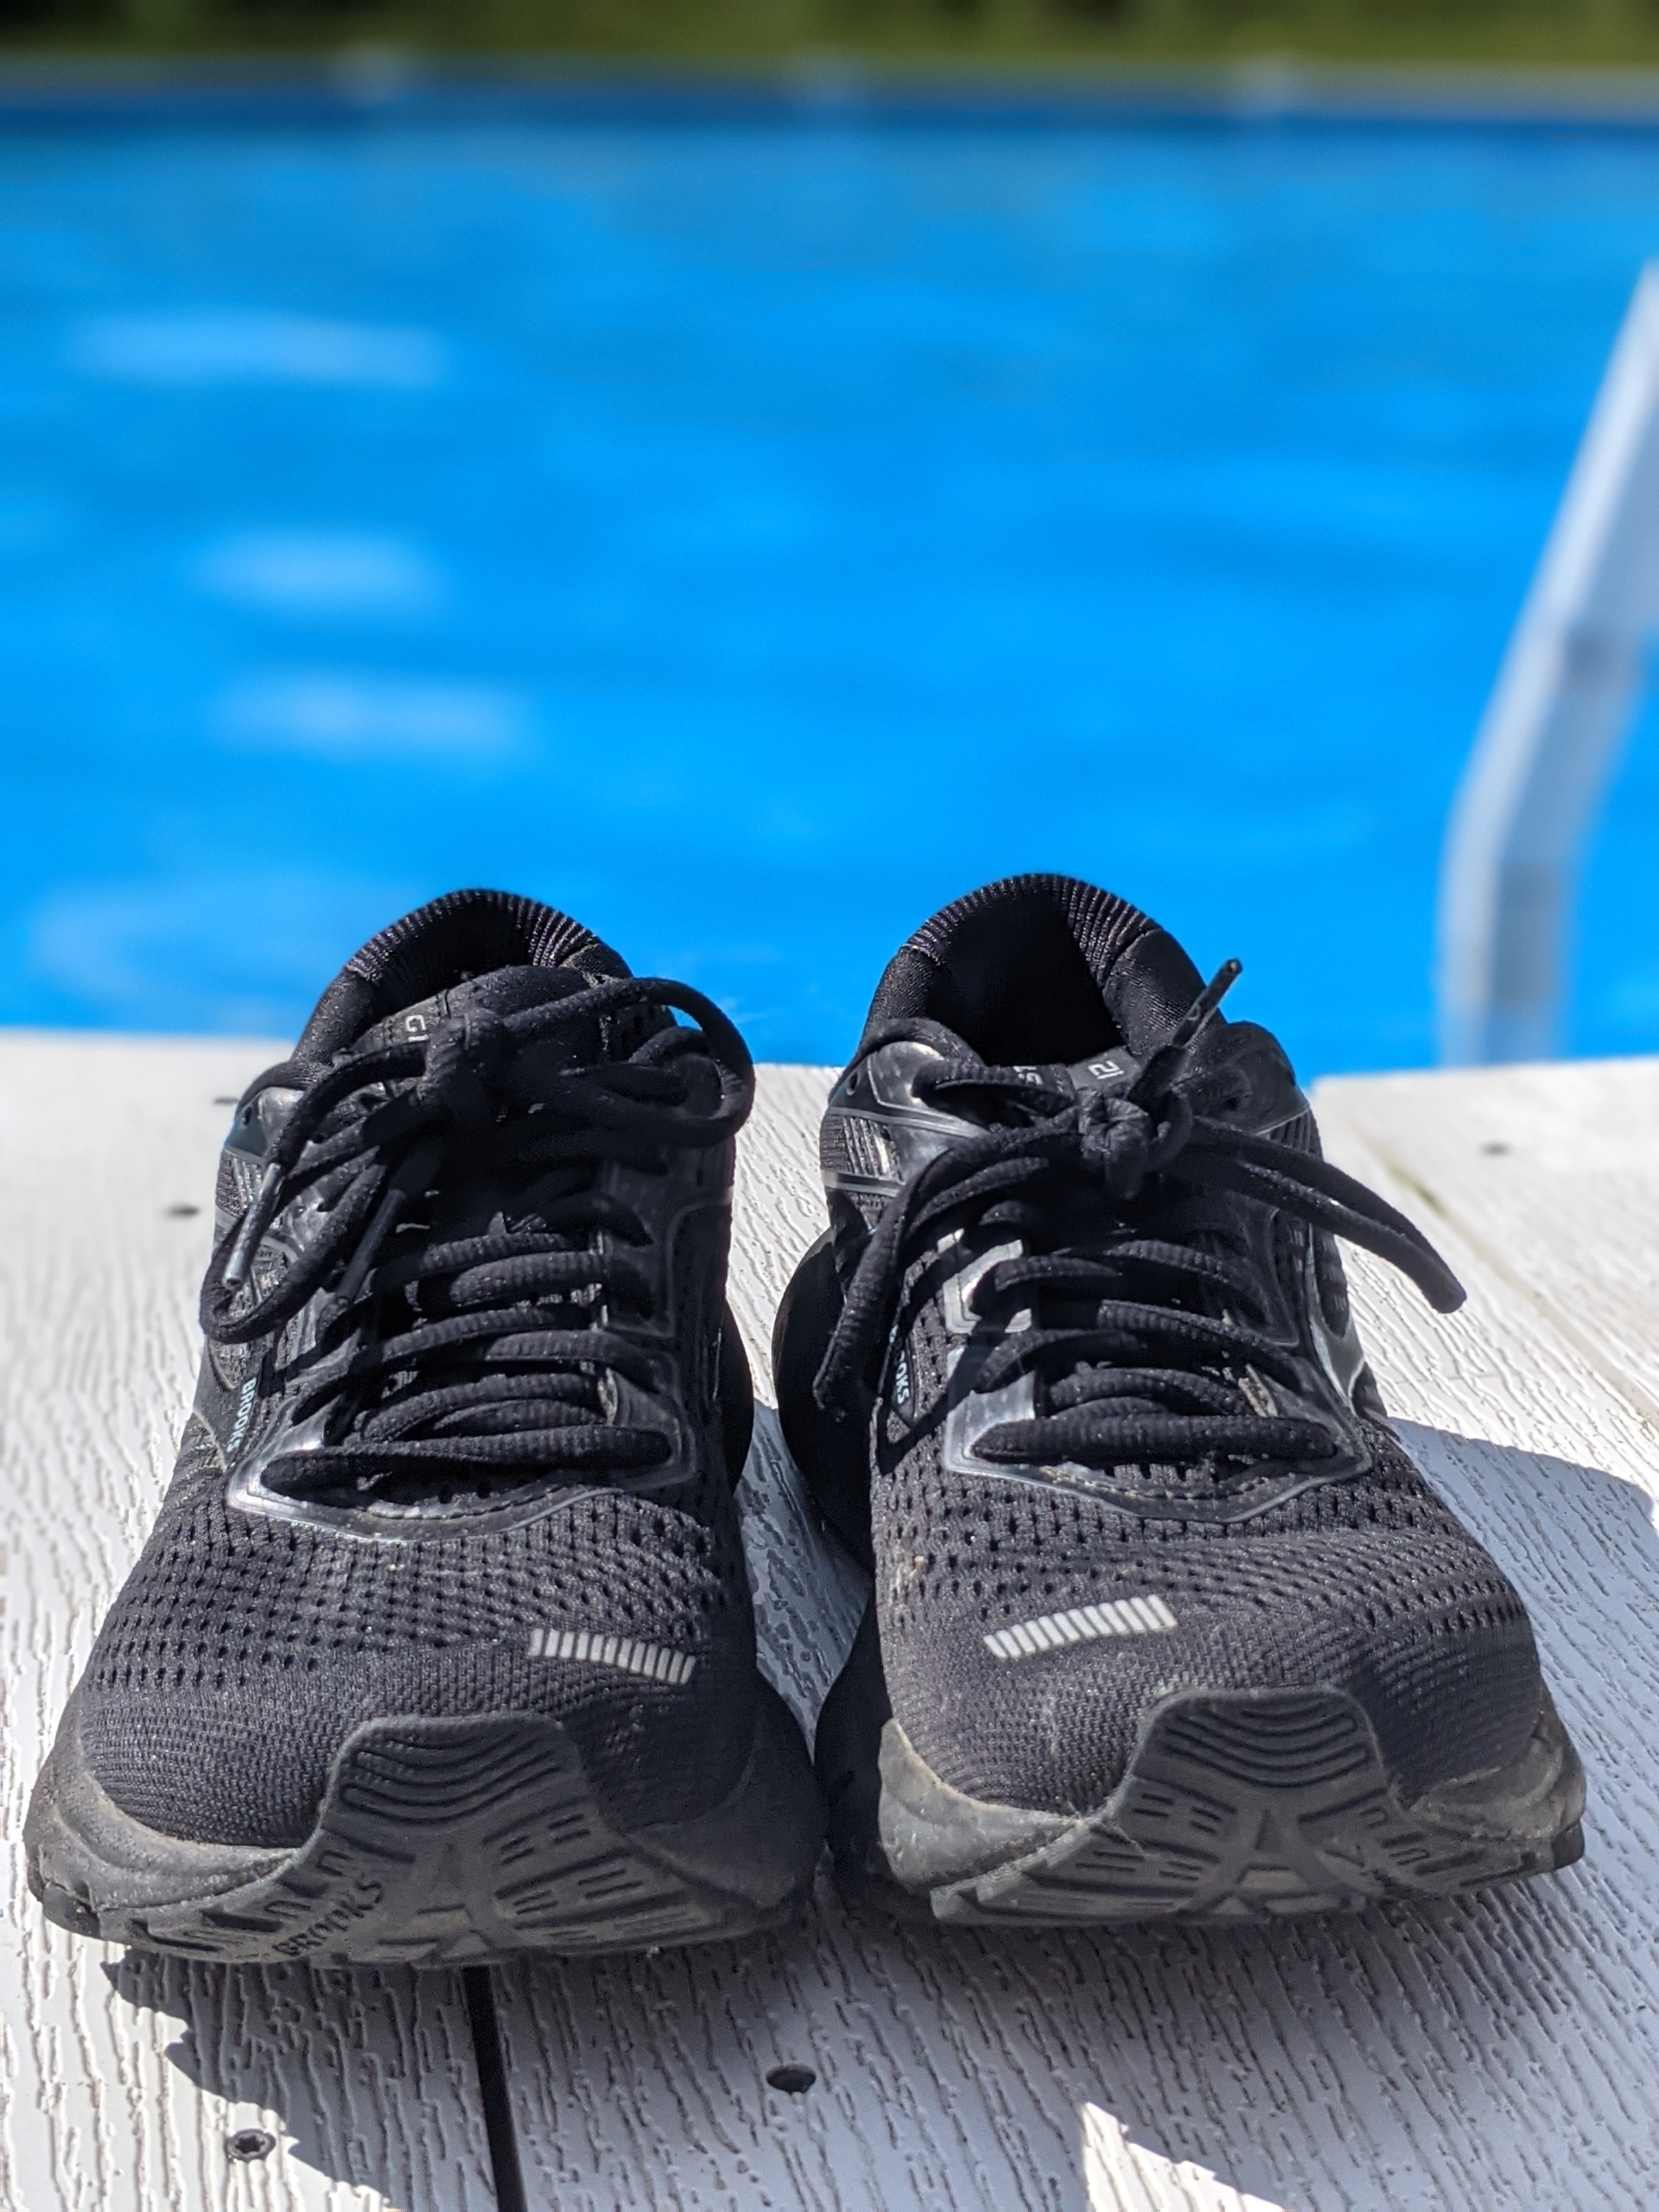 Wear old shoes to aqua jog